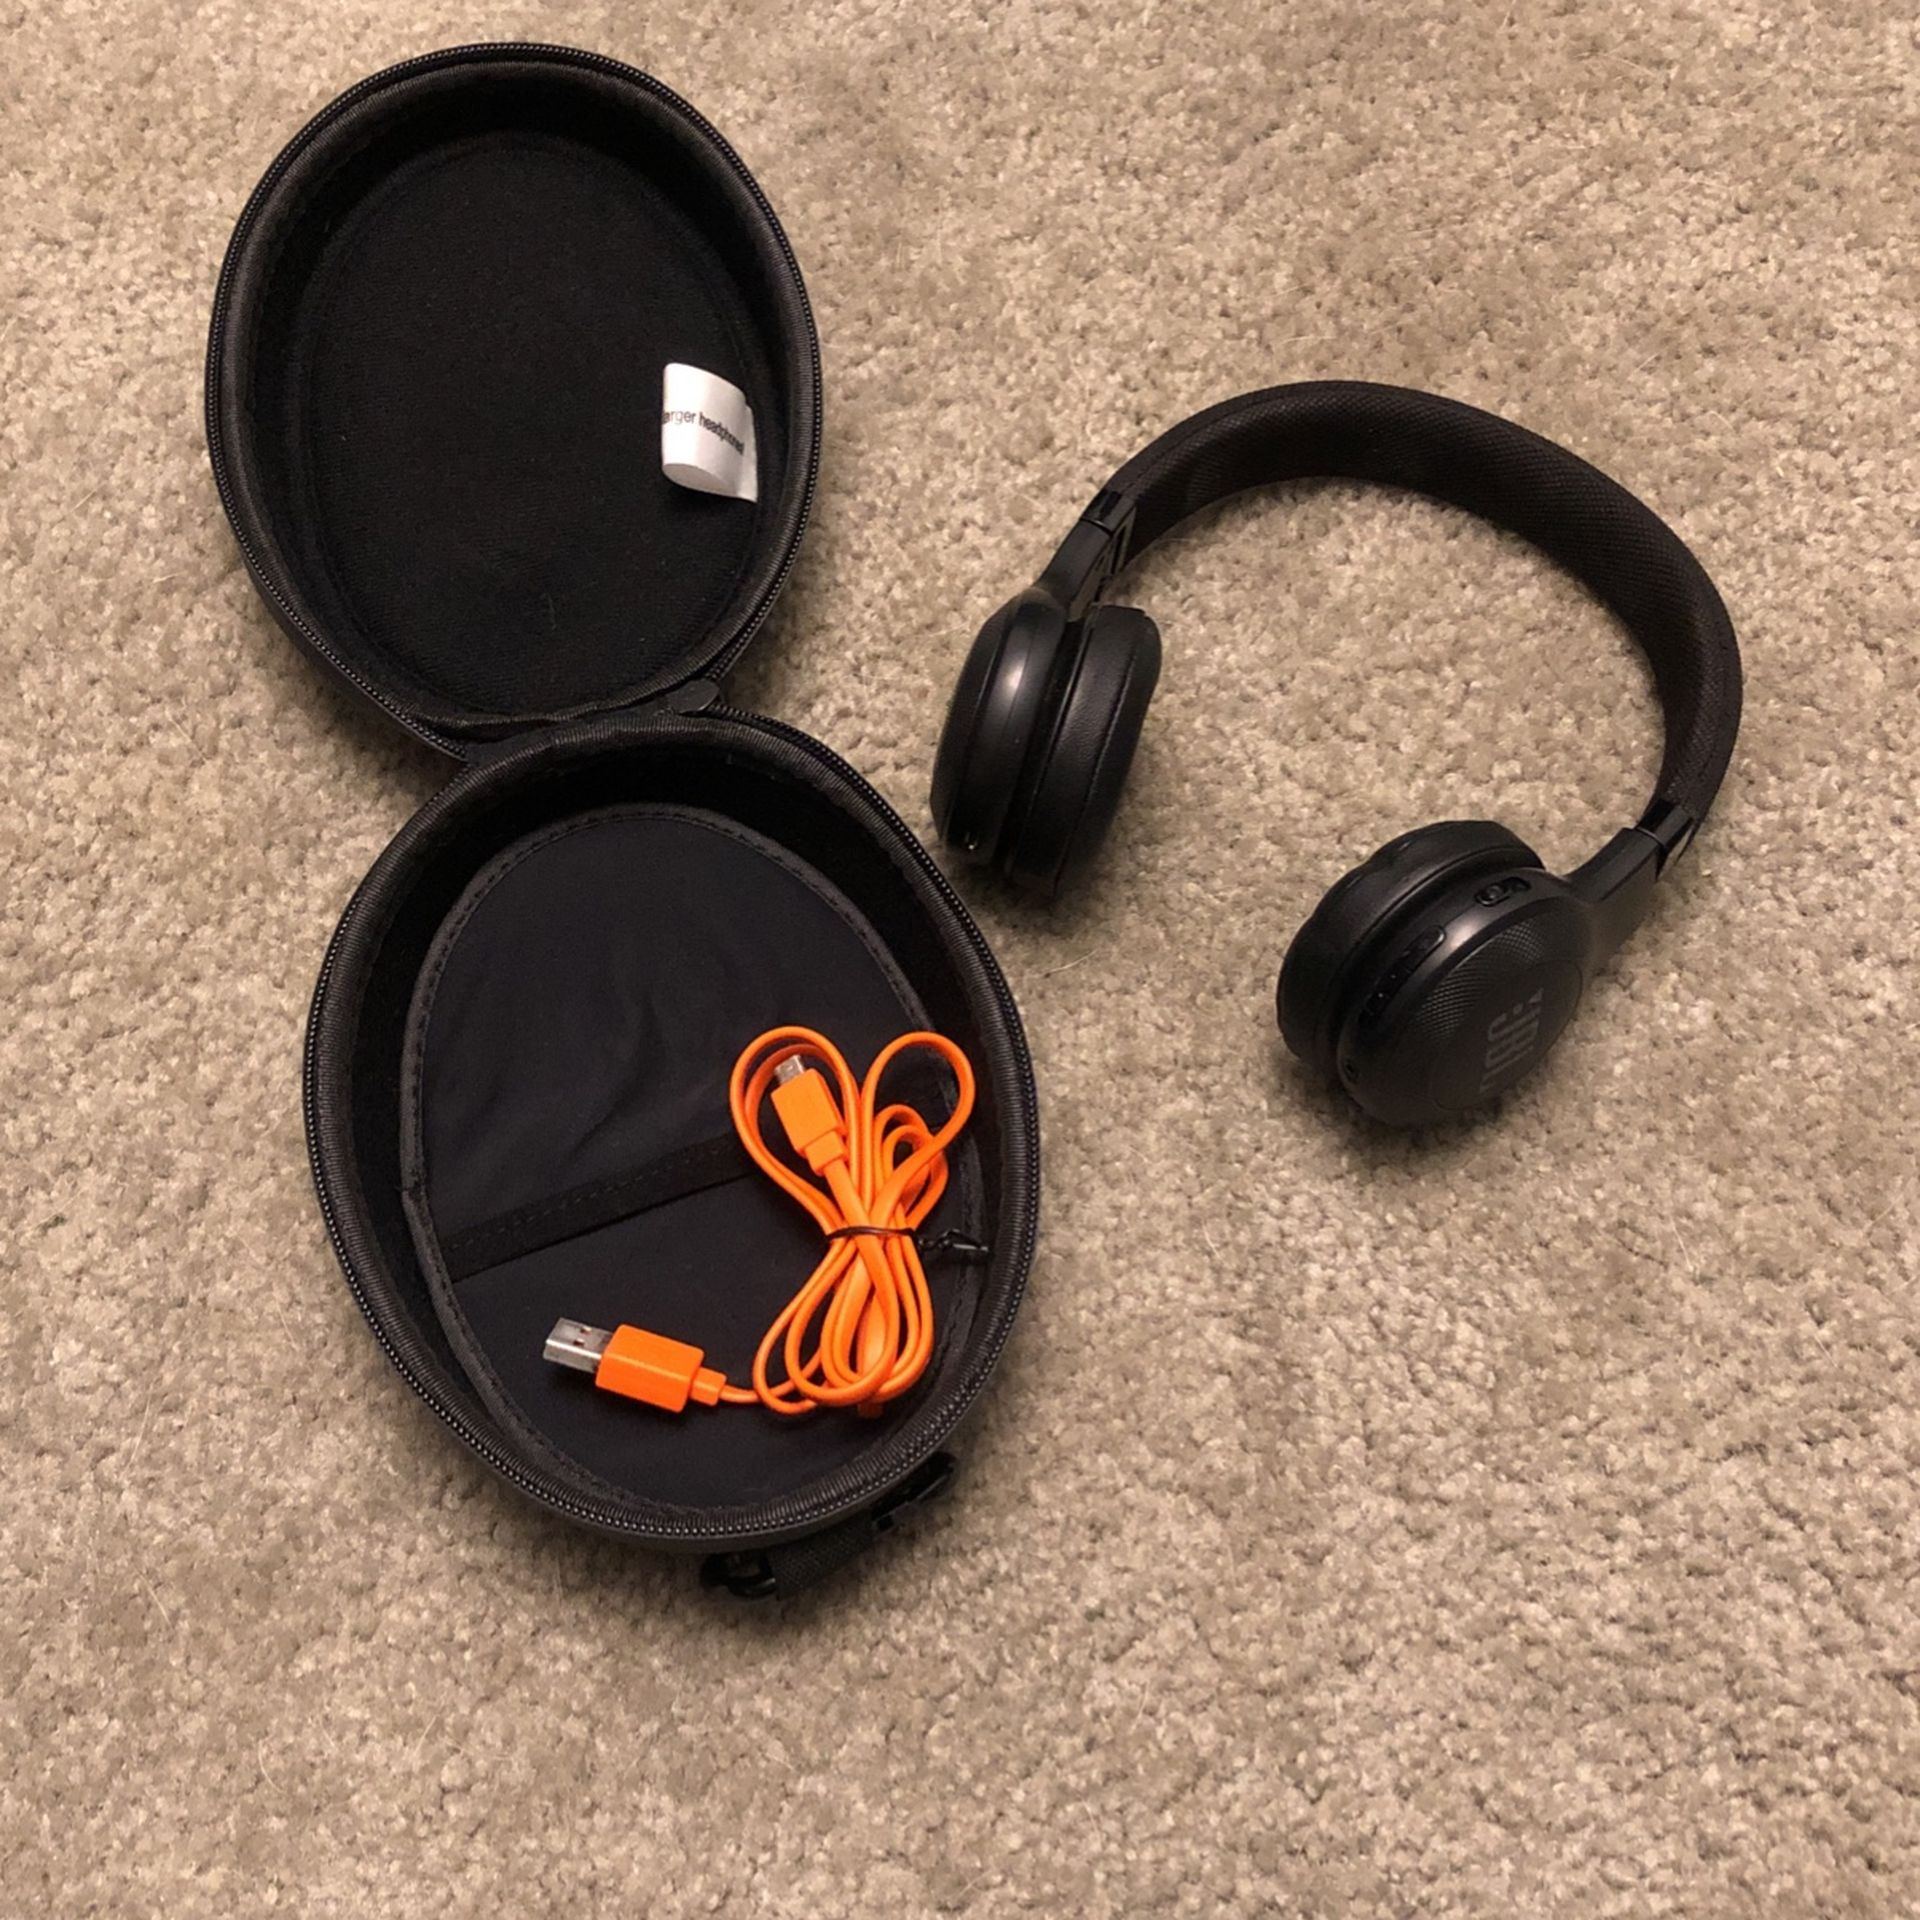 UBL E-series Wireless Headphones